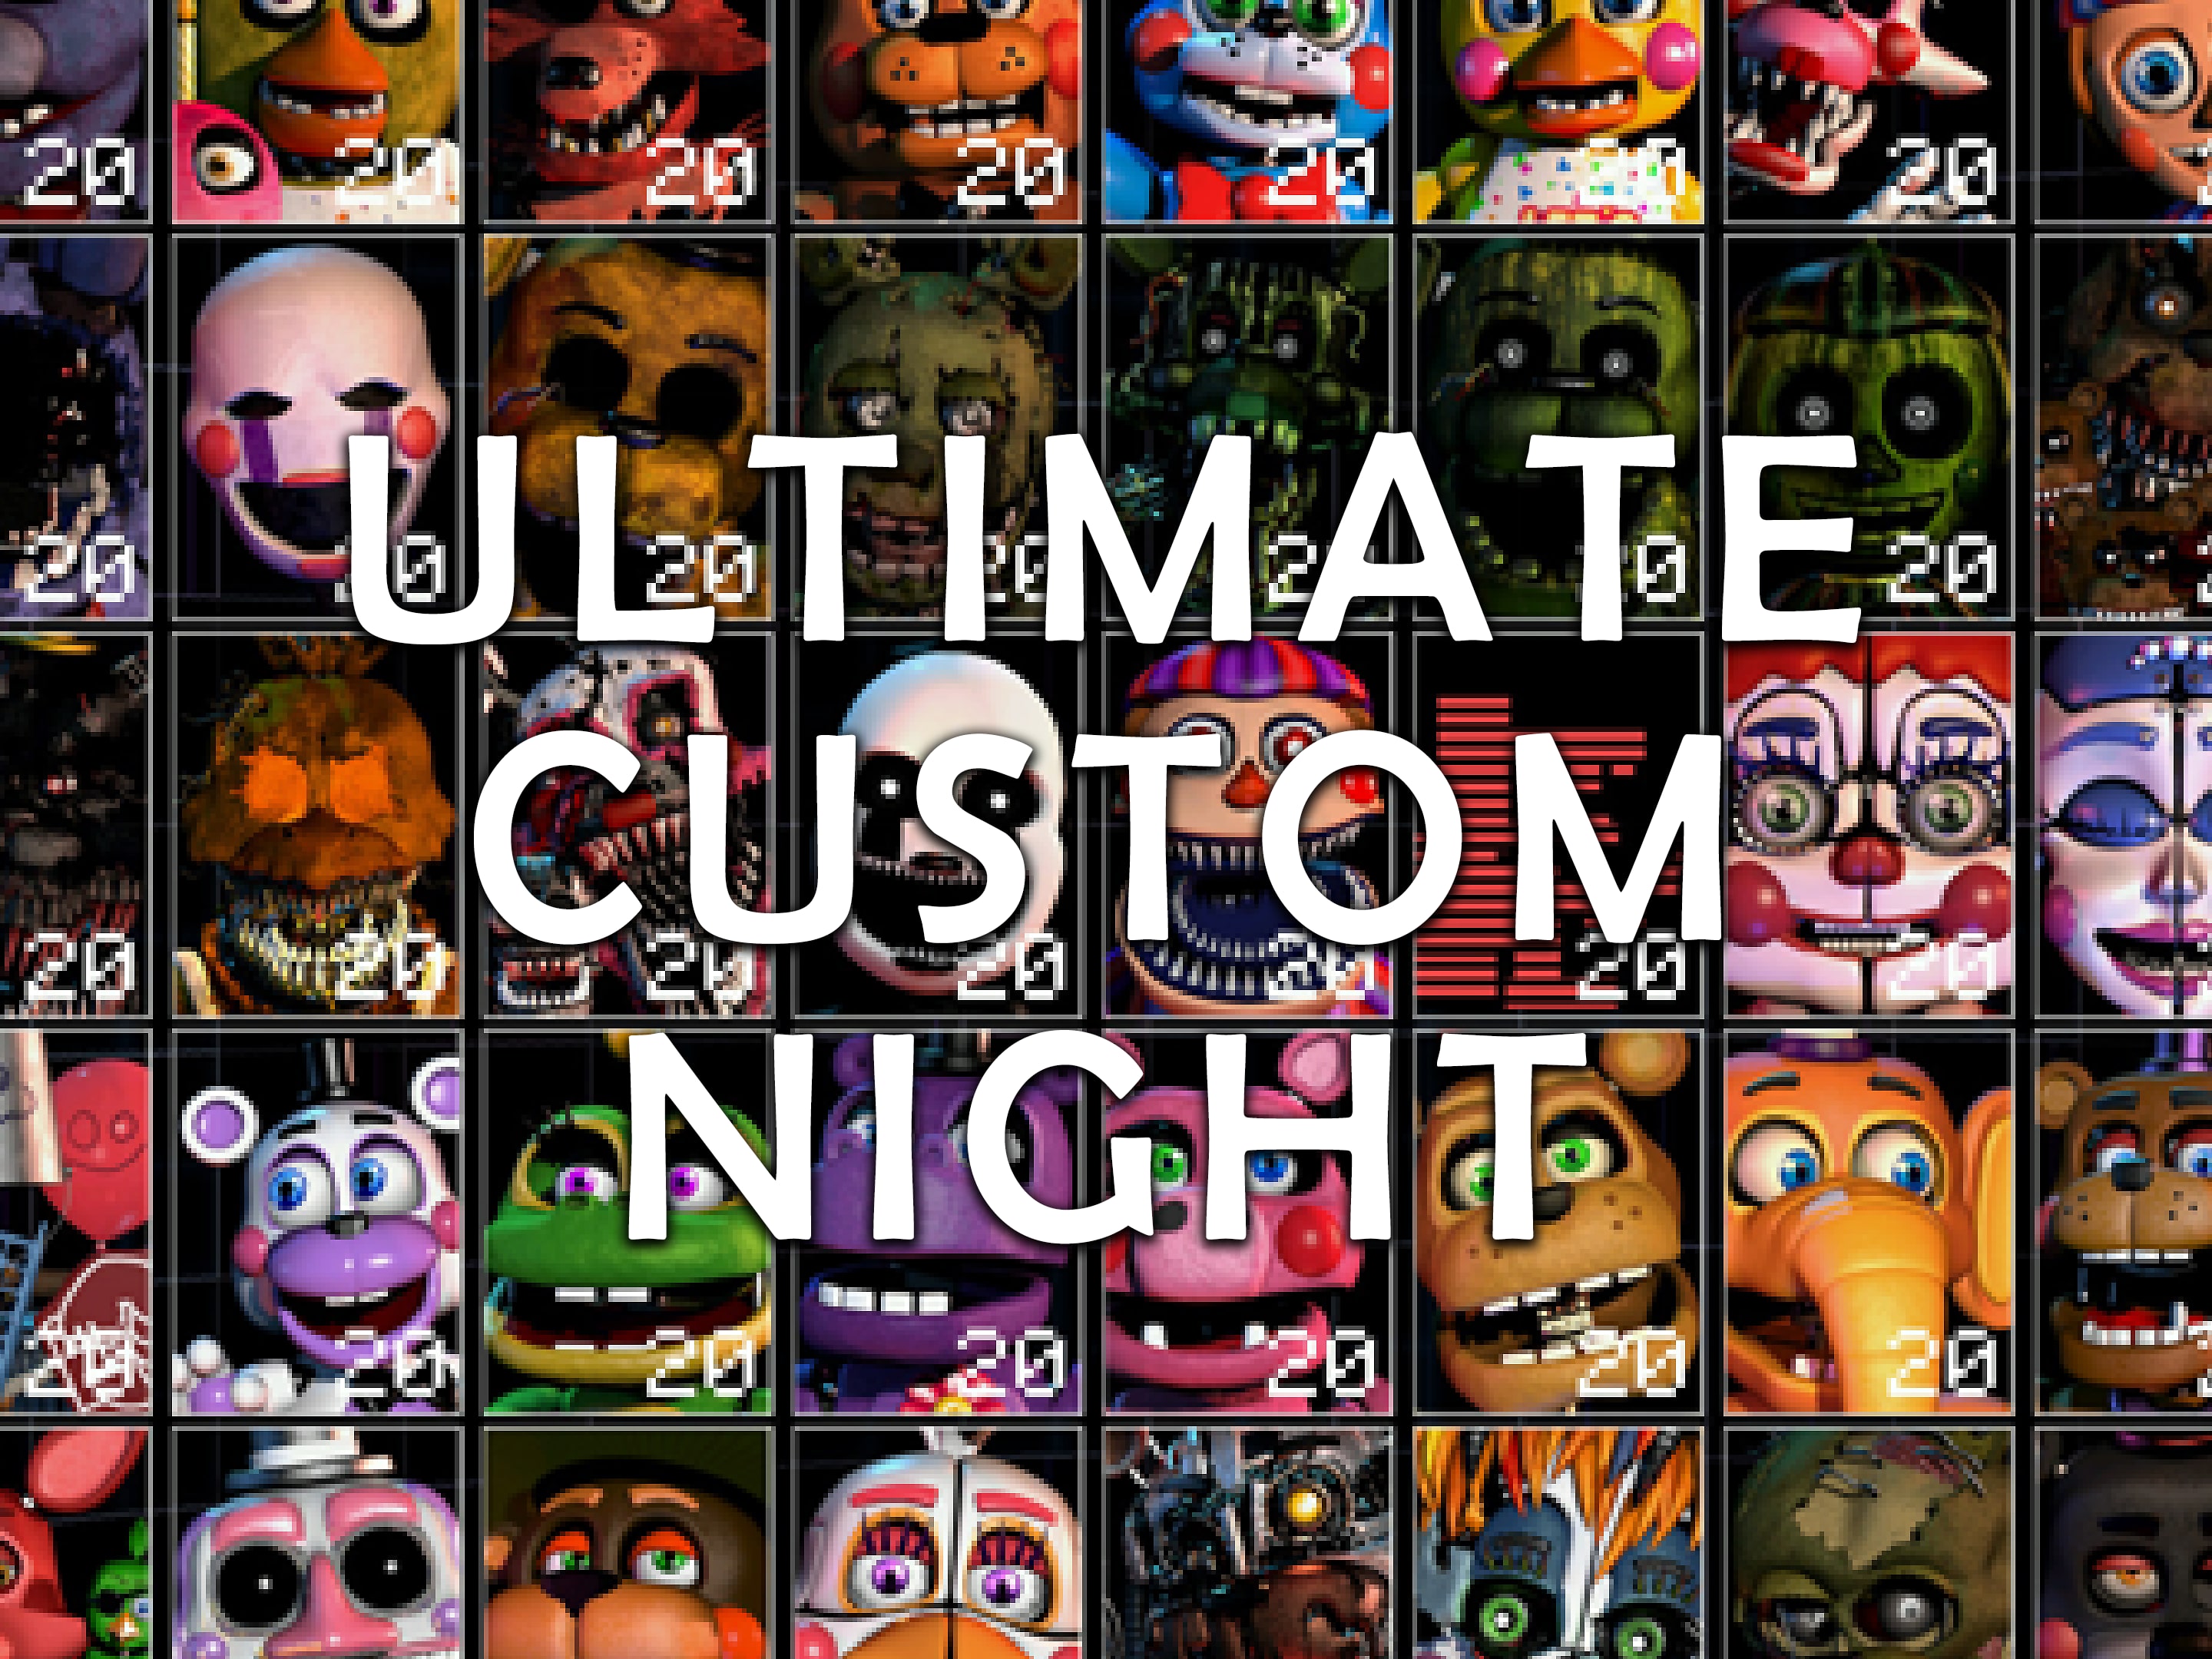 Ultimate Custom Night by Clickteam, LLC